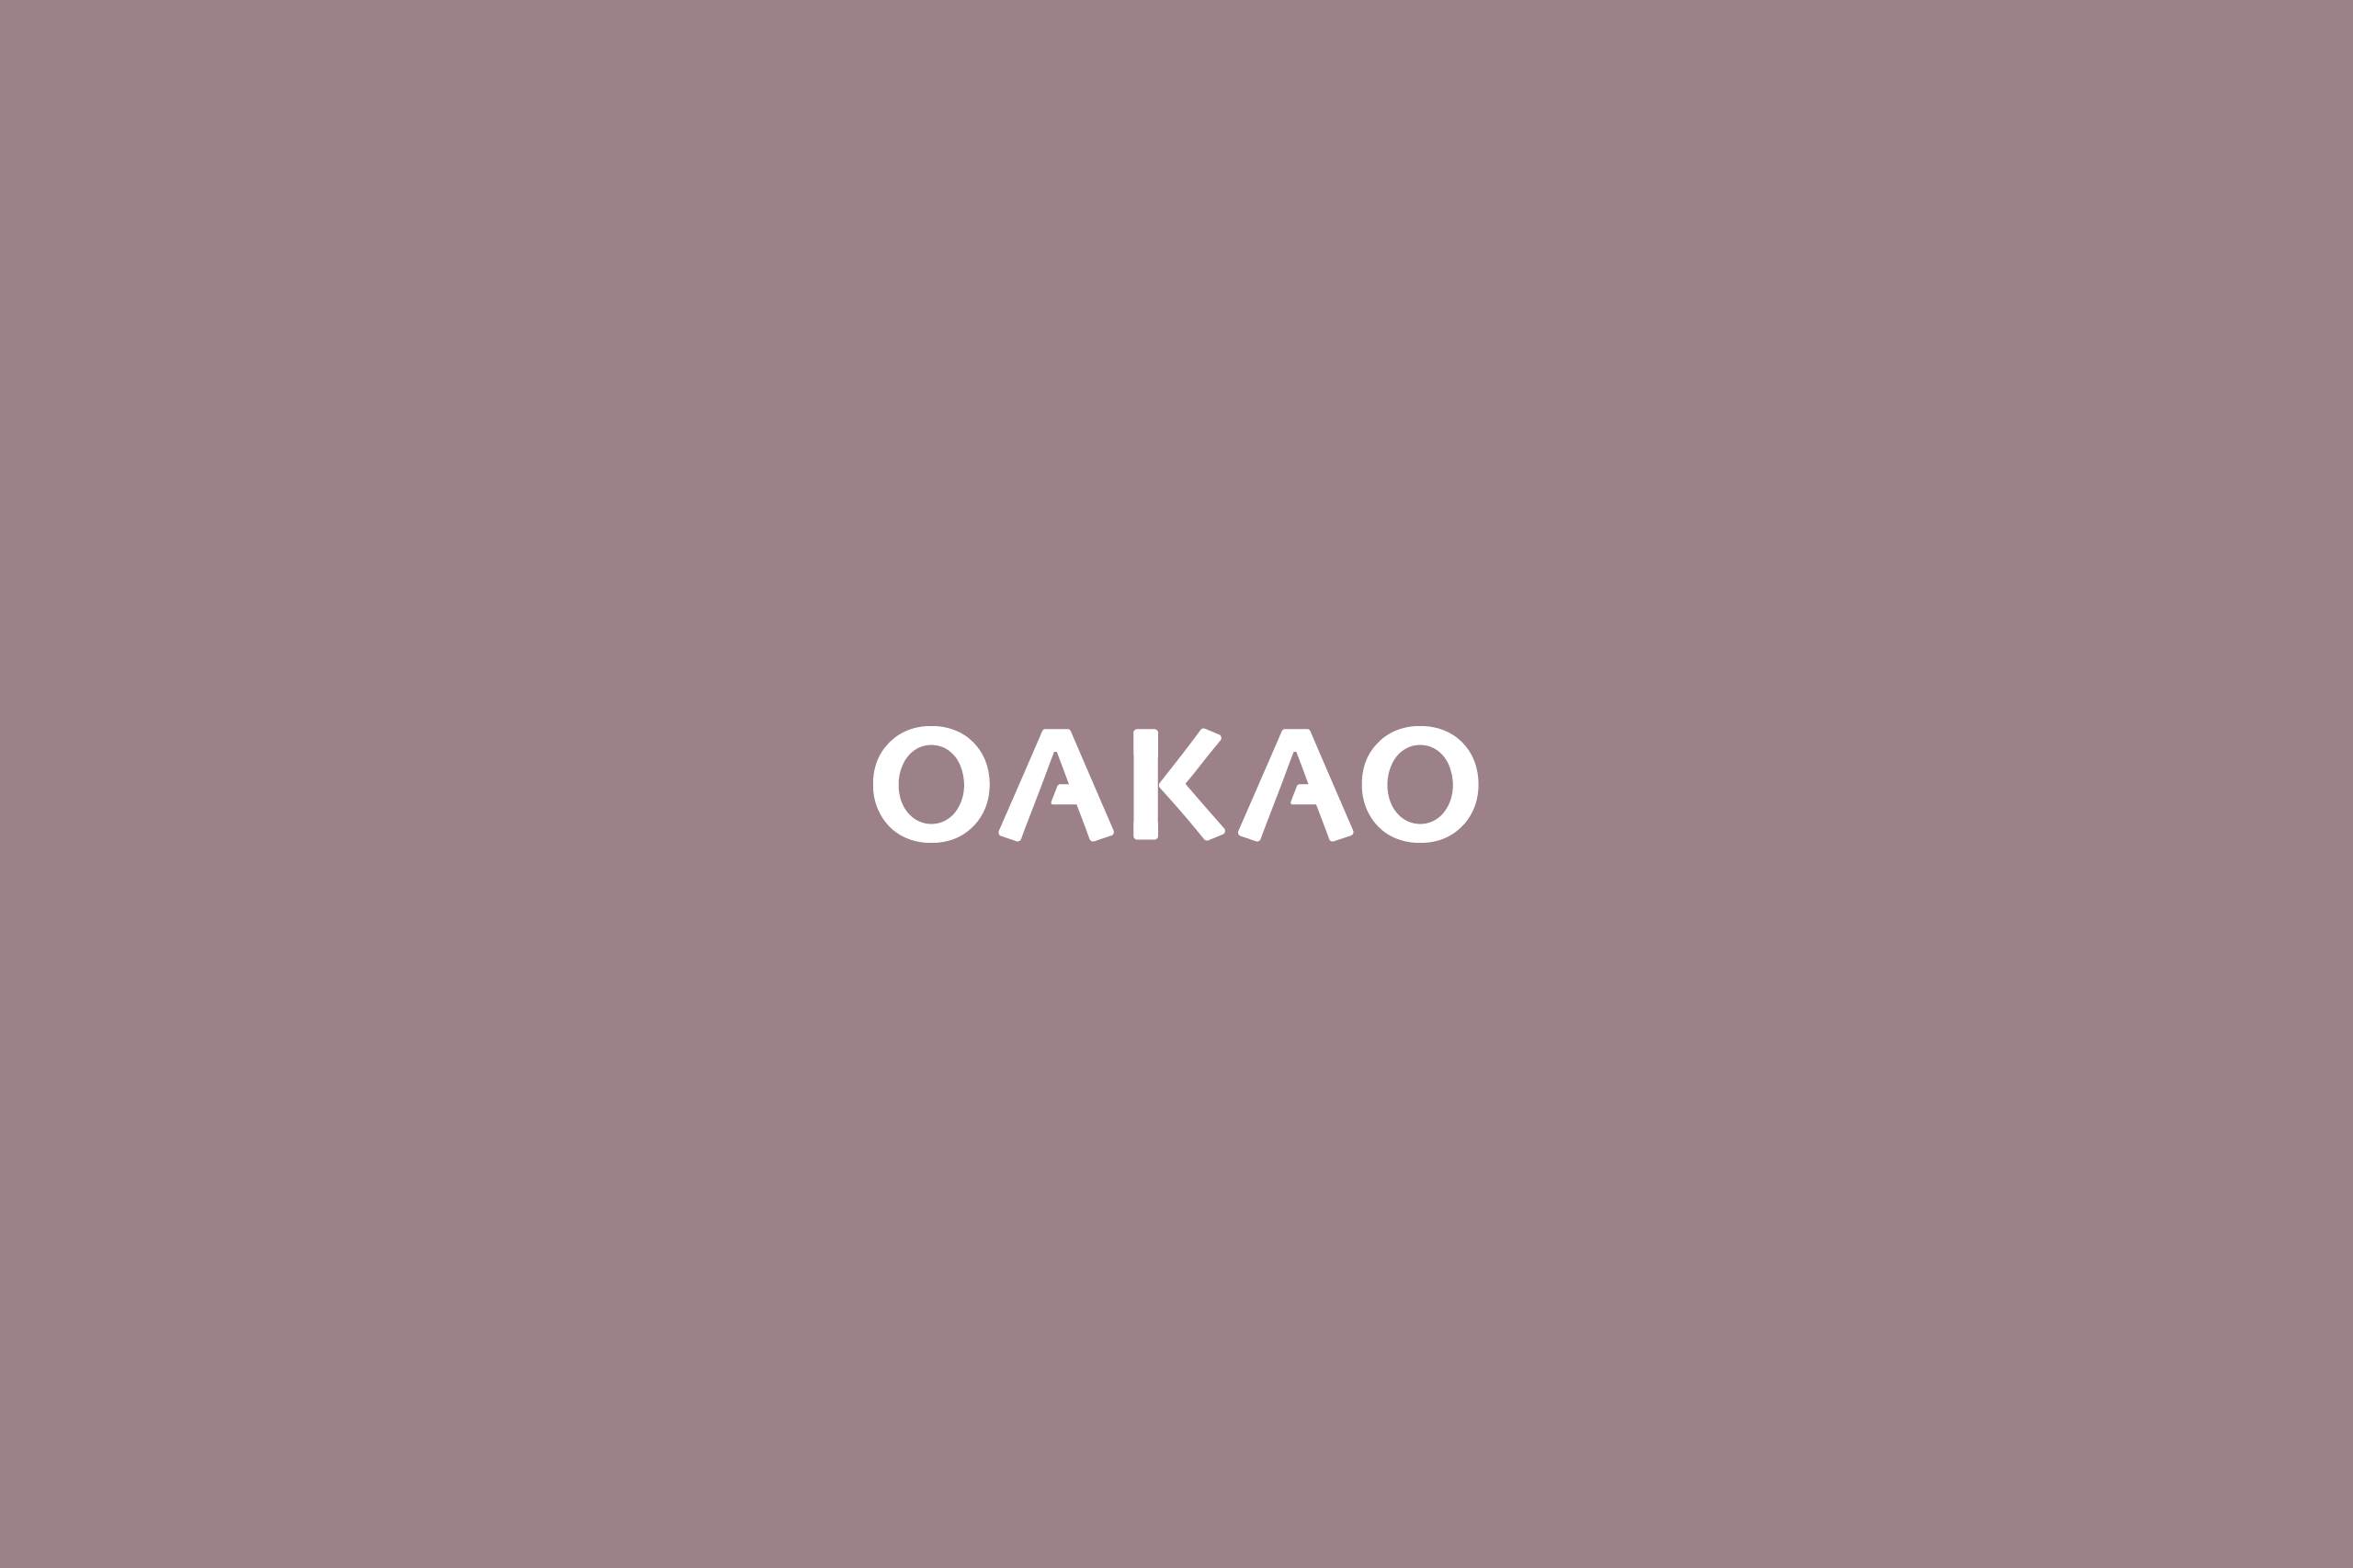 Daily logo challenge, day 7, Oakao fashion brand wordmark by Xavier Wendling